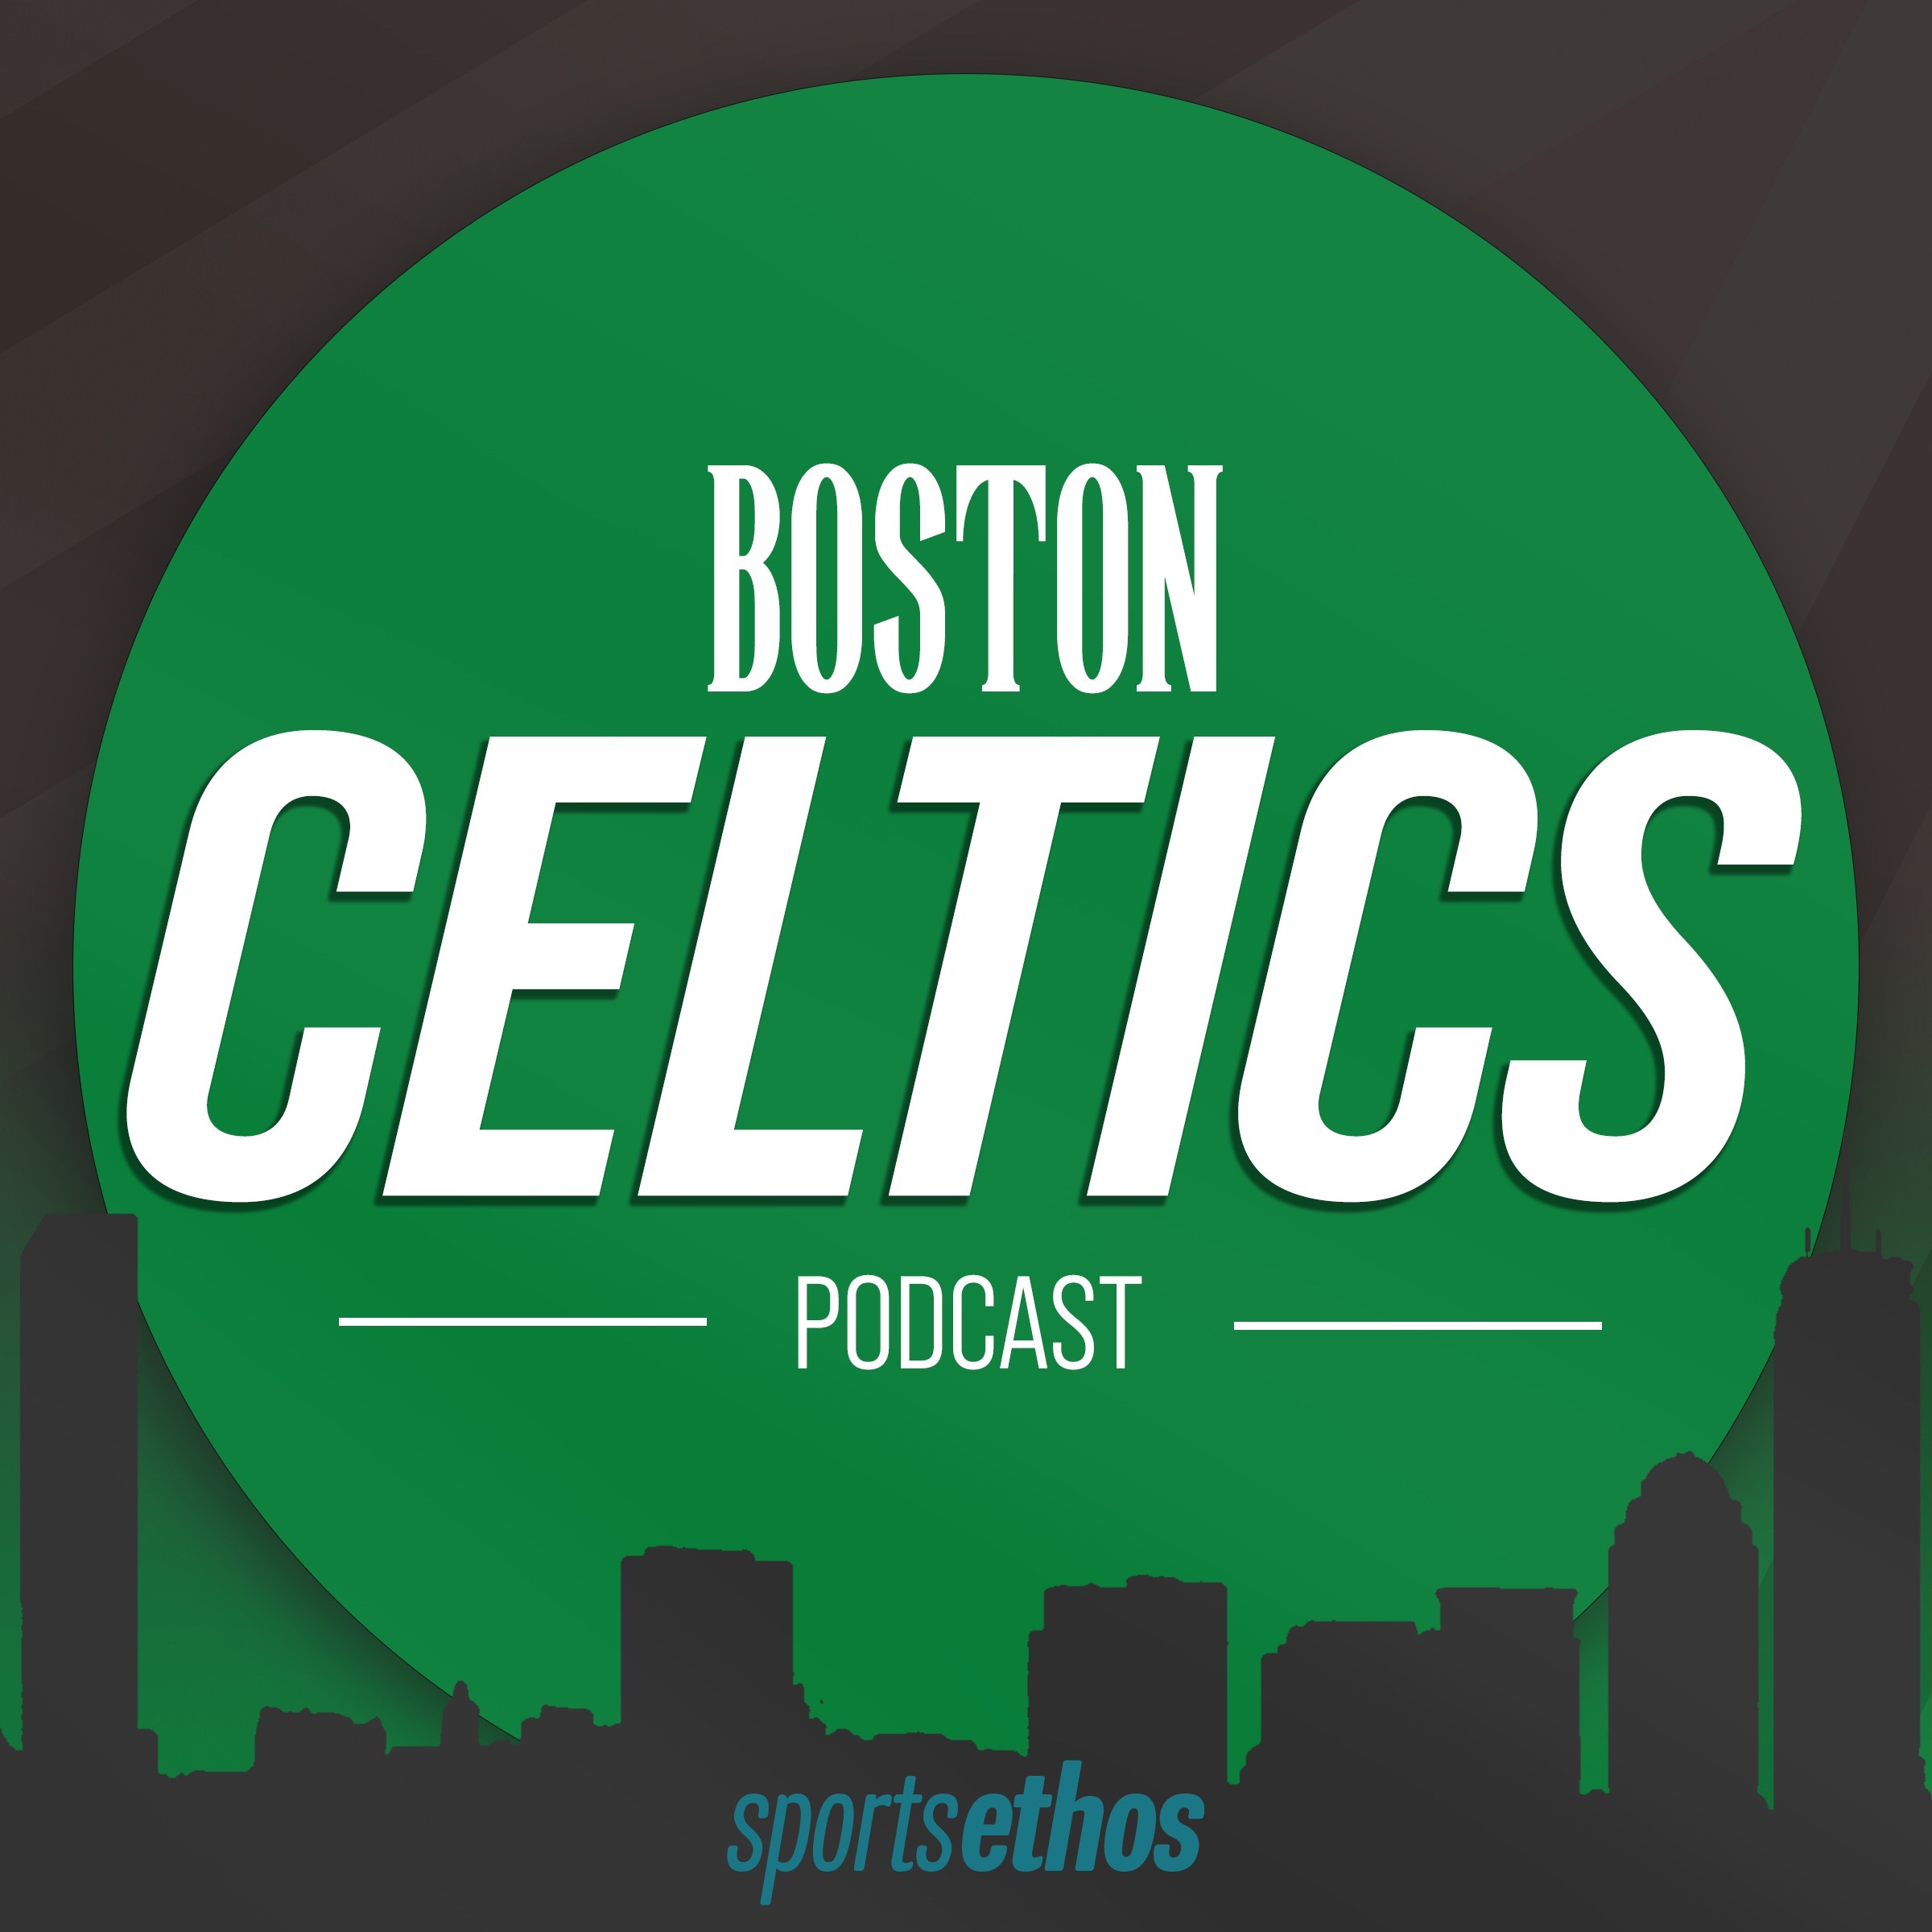 Boston Celtics at Brooklyn Nets Round 1 Game 5 6/1/21 - CelticsBlog